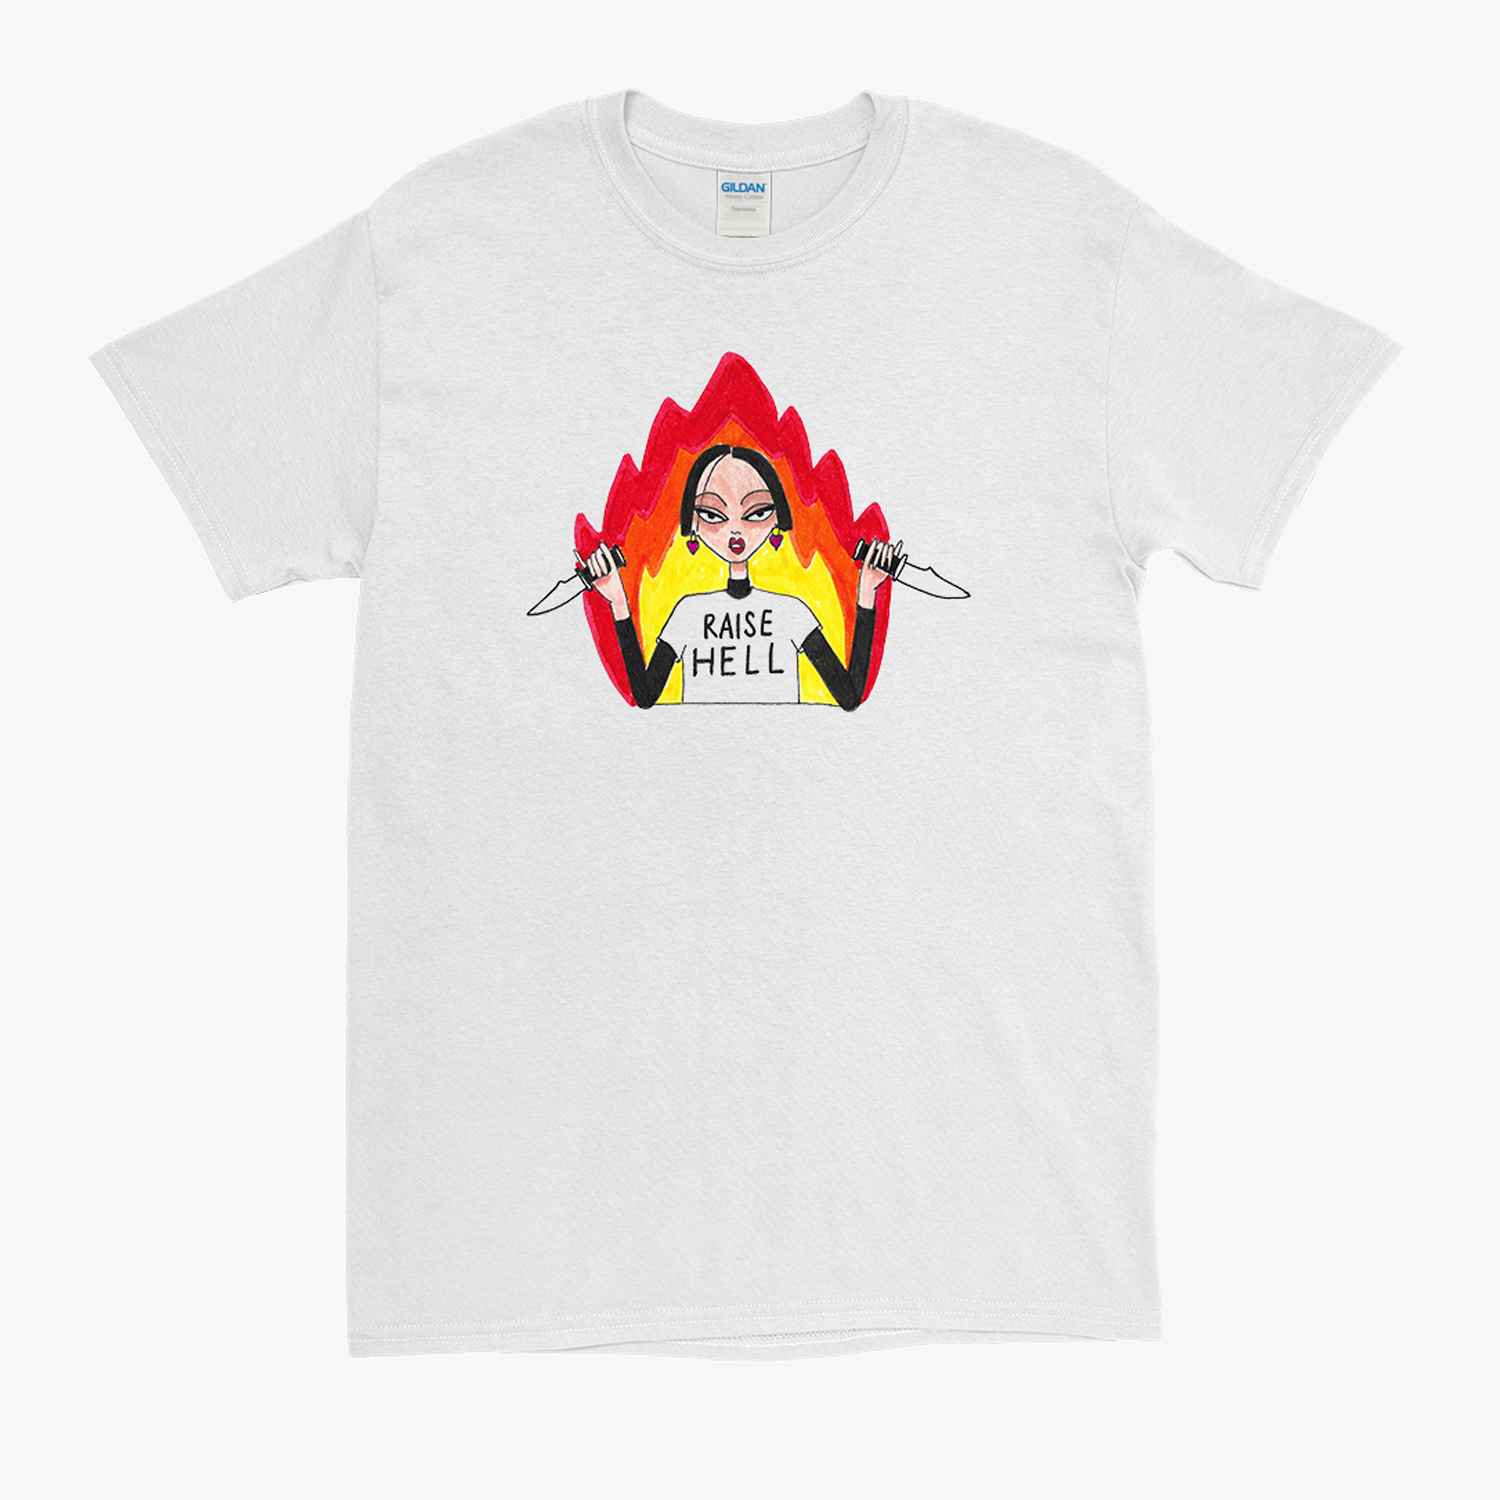 Emma Allegretti's 'Raise Hell' T-shirt